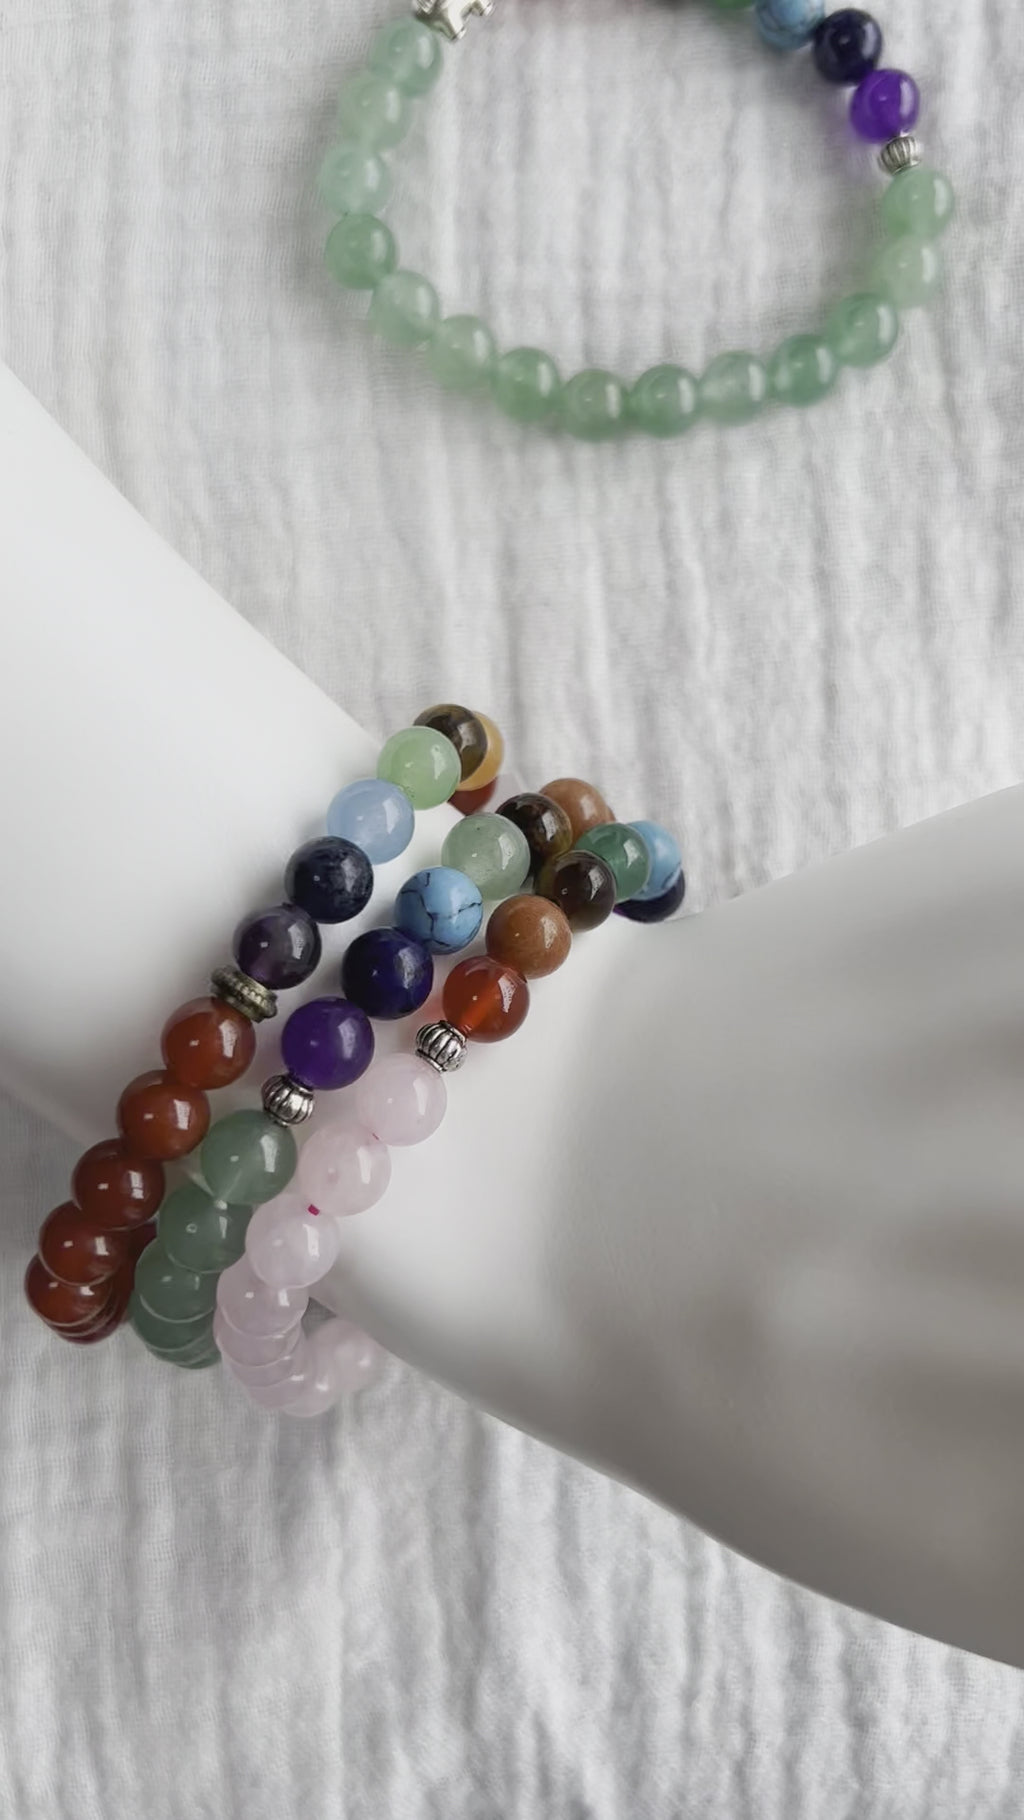 Rose quartz, Aventurine, Carnelian - 7 Chakras bracelets on wrist - video